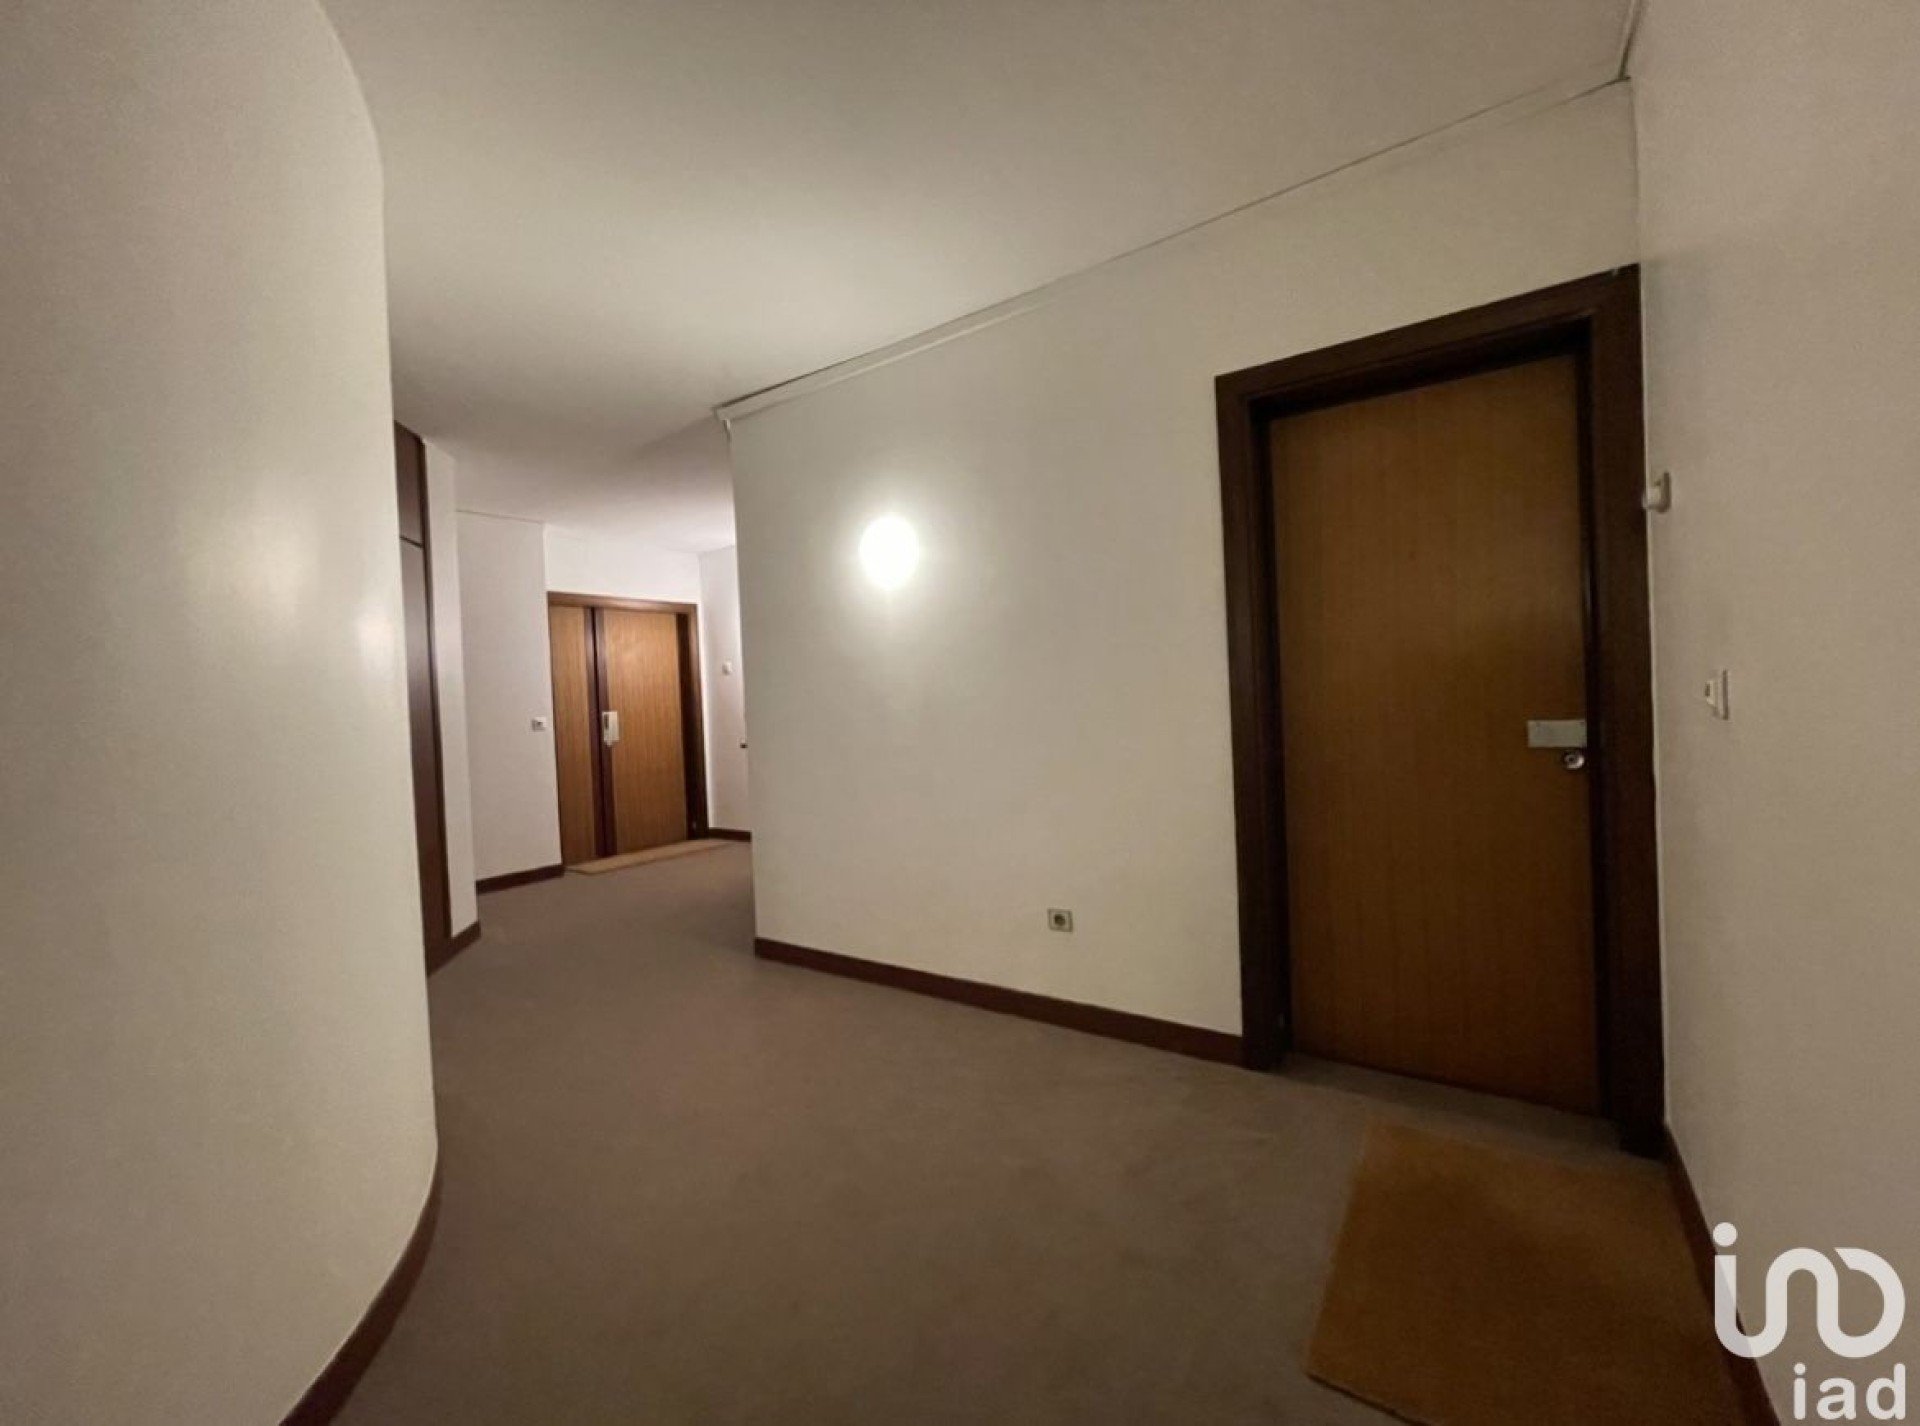 Appartement a louer neuilly-sur-seine - 1 pièce(s) - 17 m2 - Surfyn